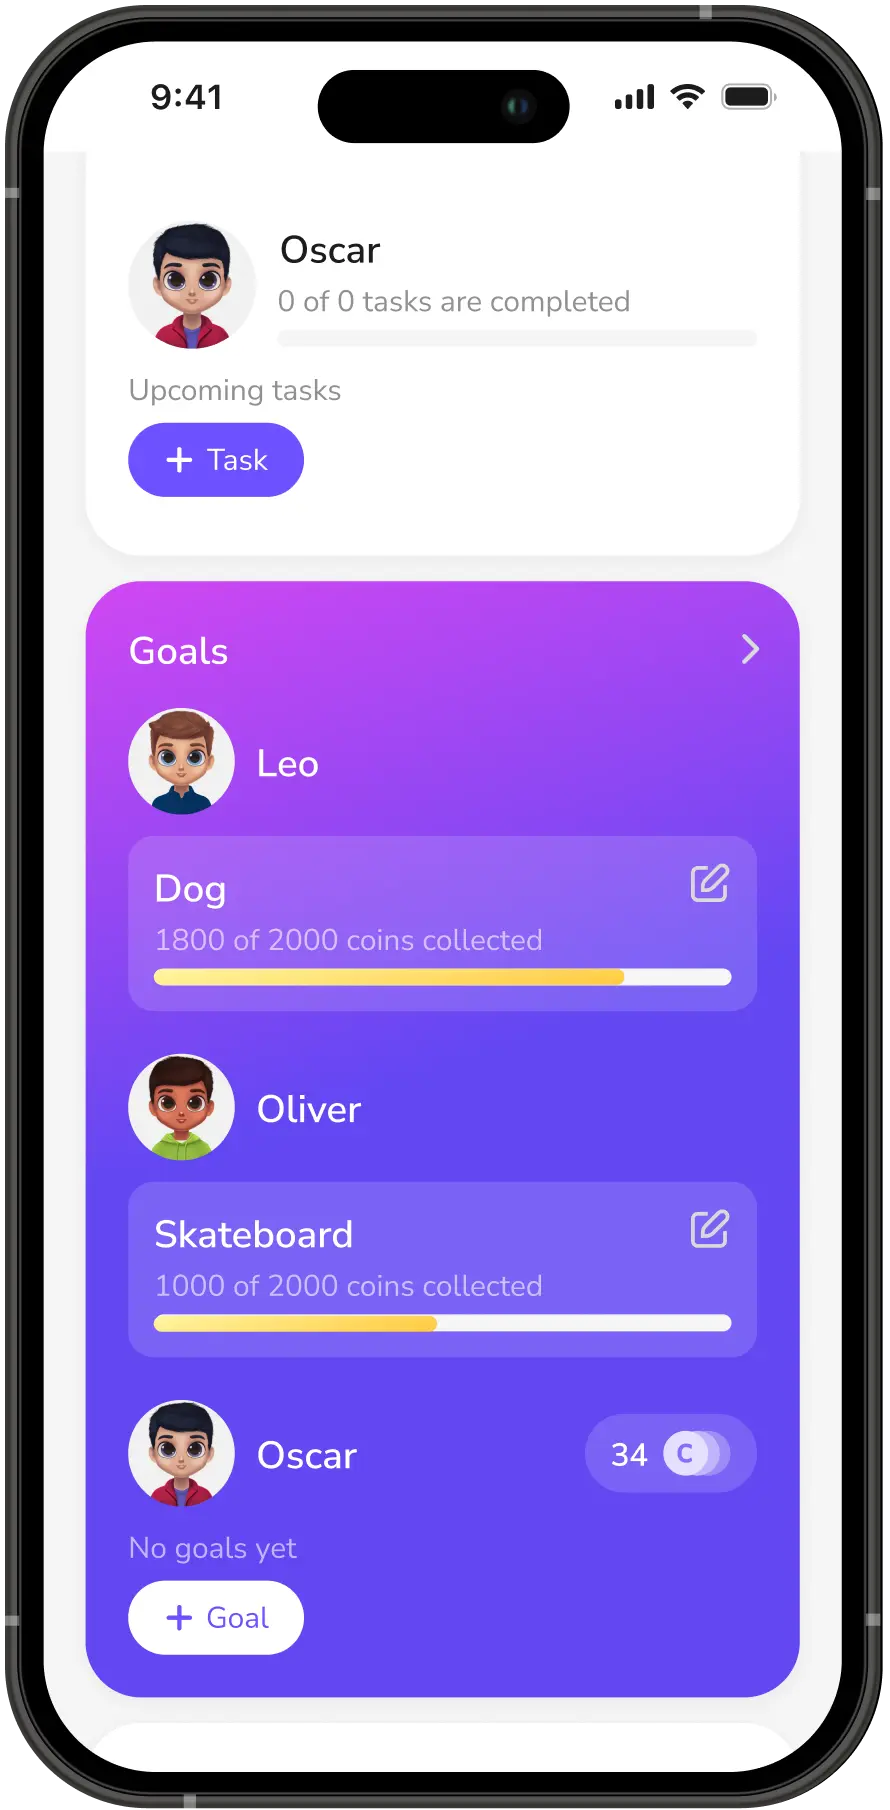 interface of mobile family planner for kids